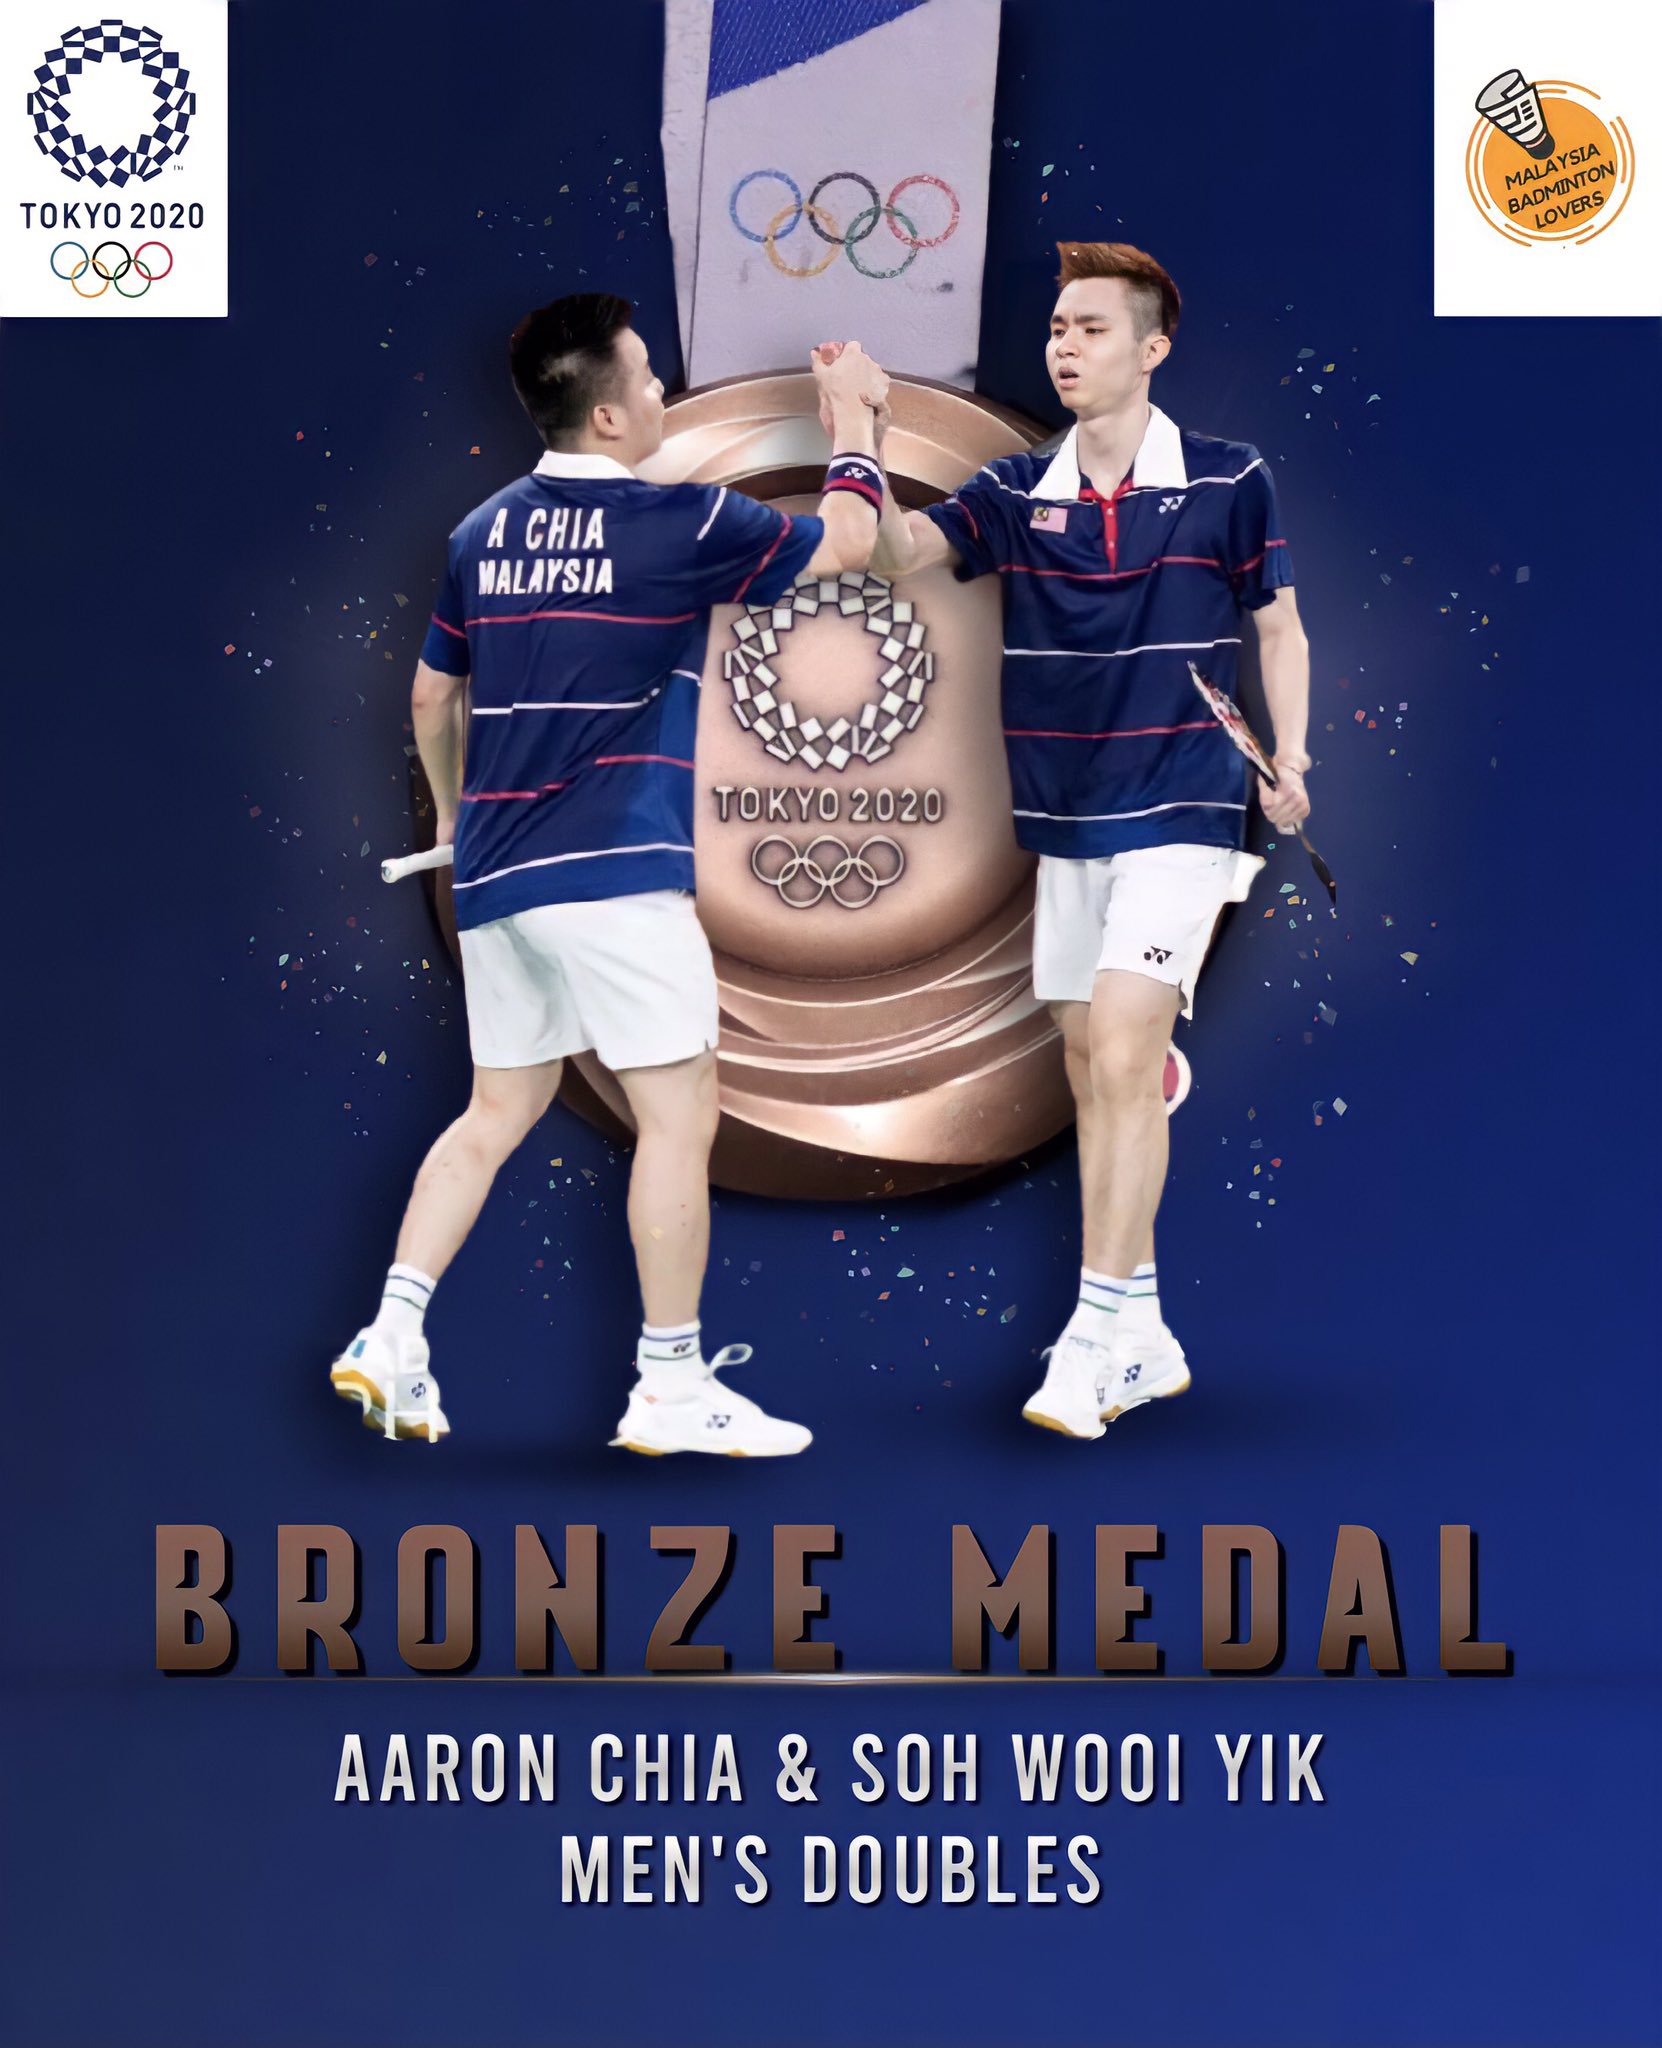 Malaysia bronze medal